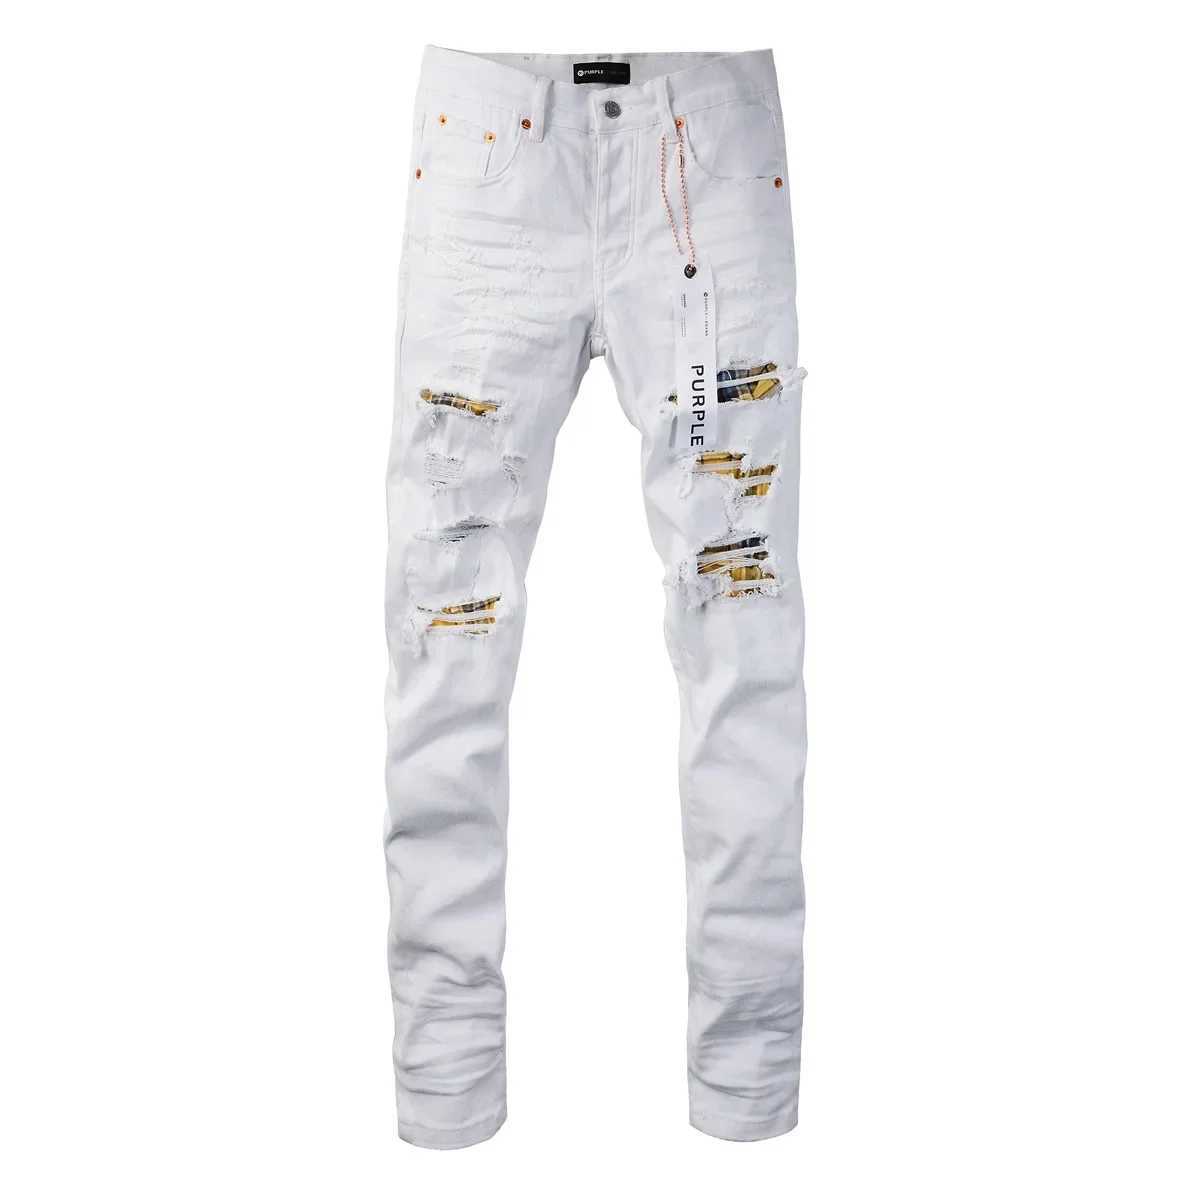 Lila Marke Jeans Mode hochwertige High Street White Patch Loch Reparatur niedriger konvexer Denimhose 28-40 Hose Größe